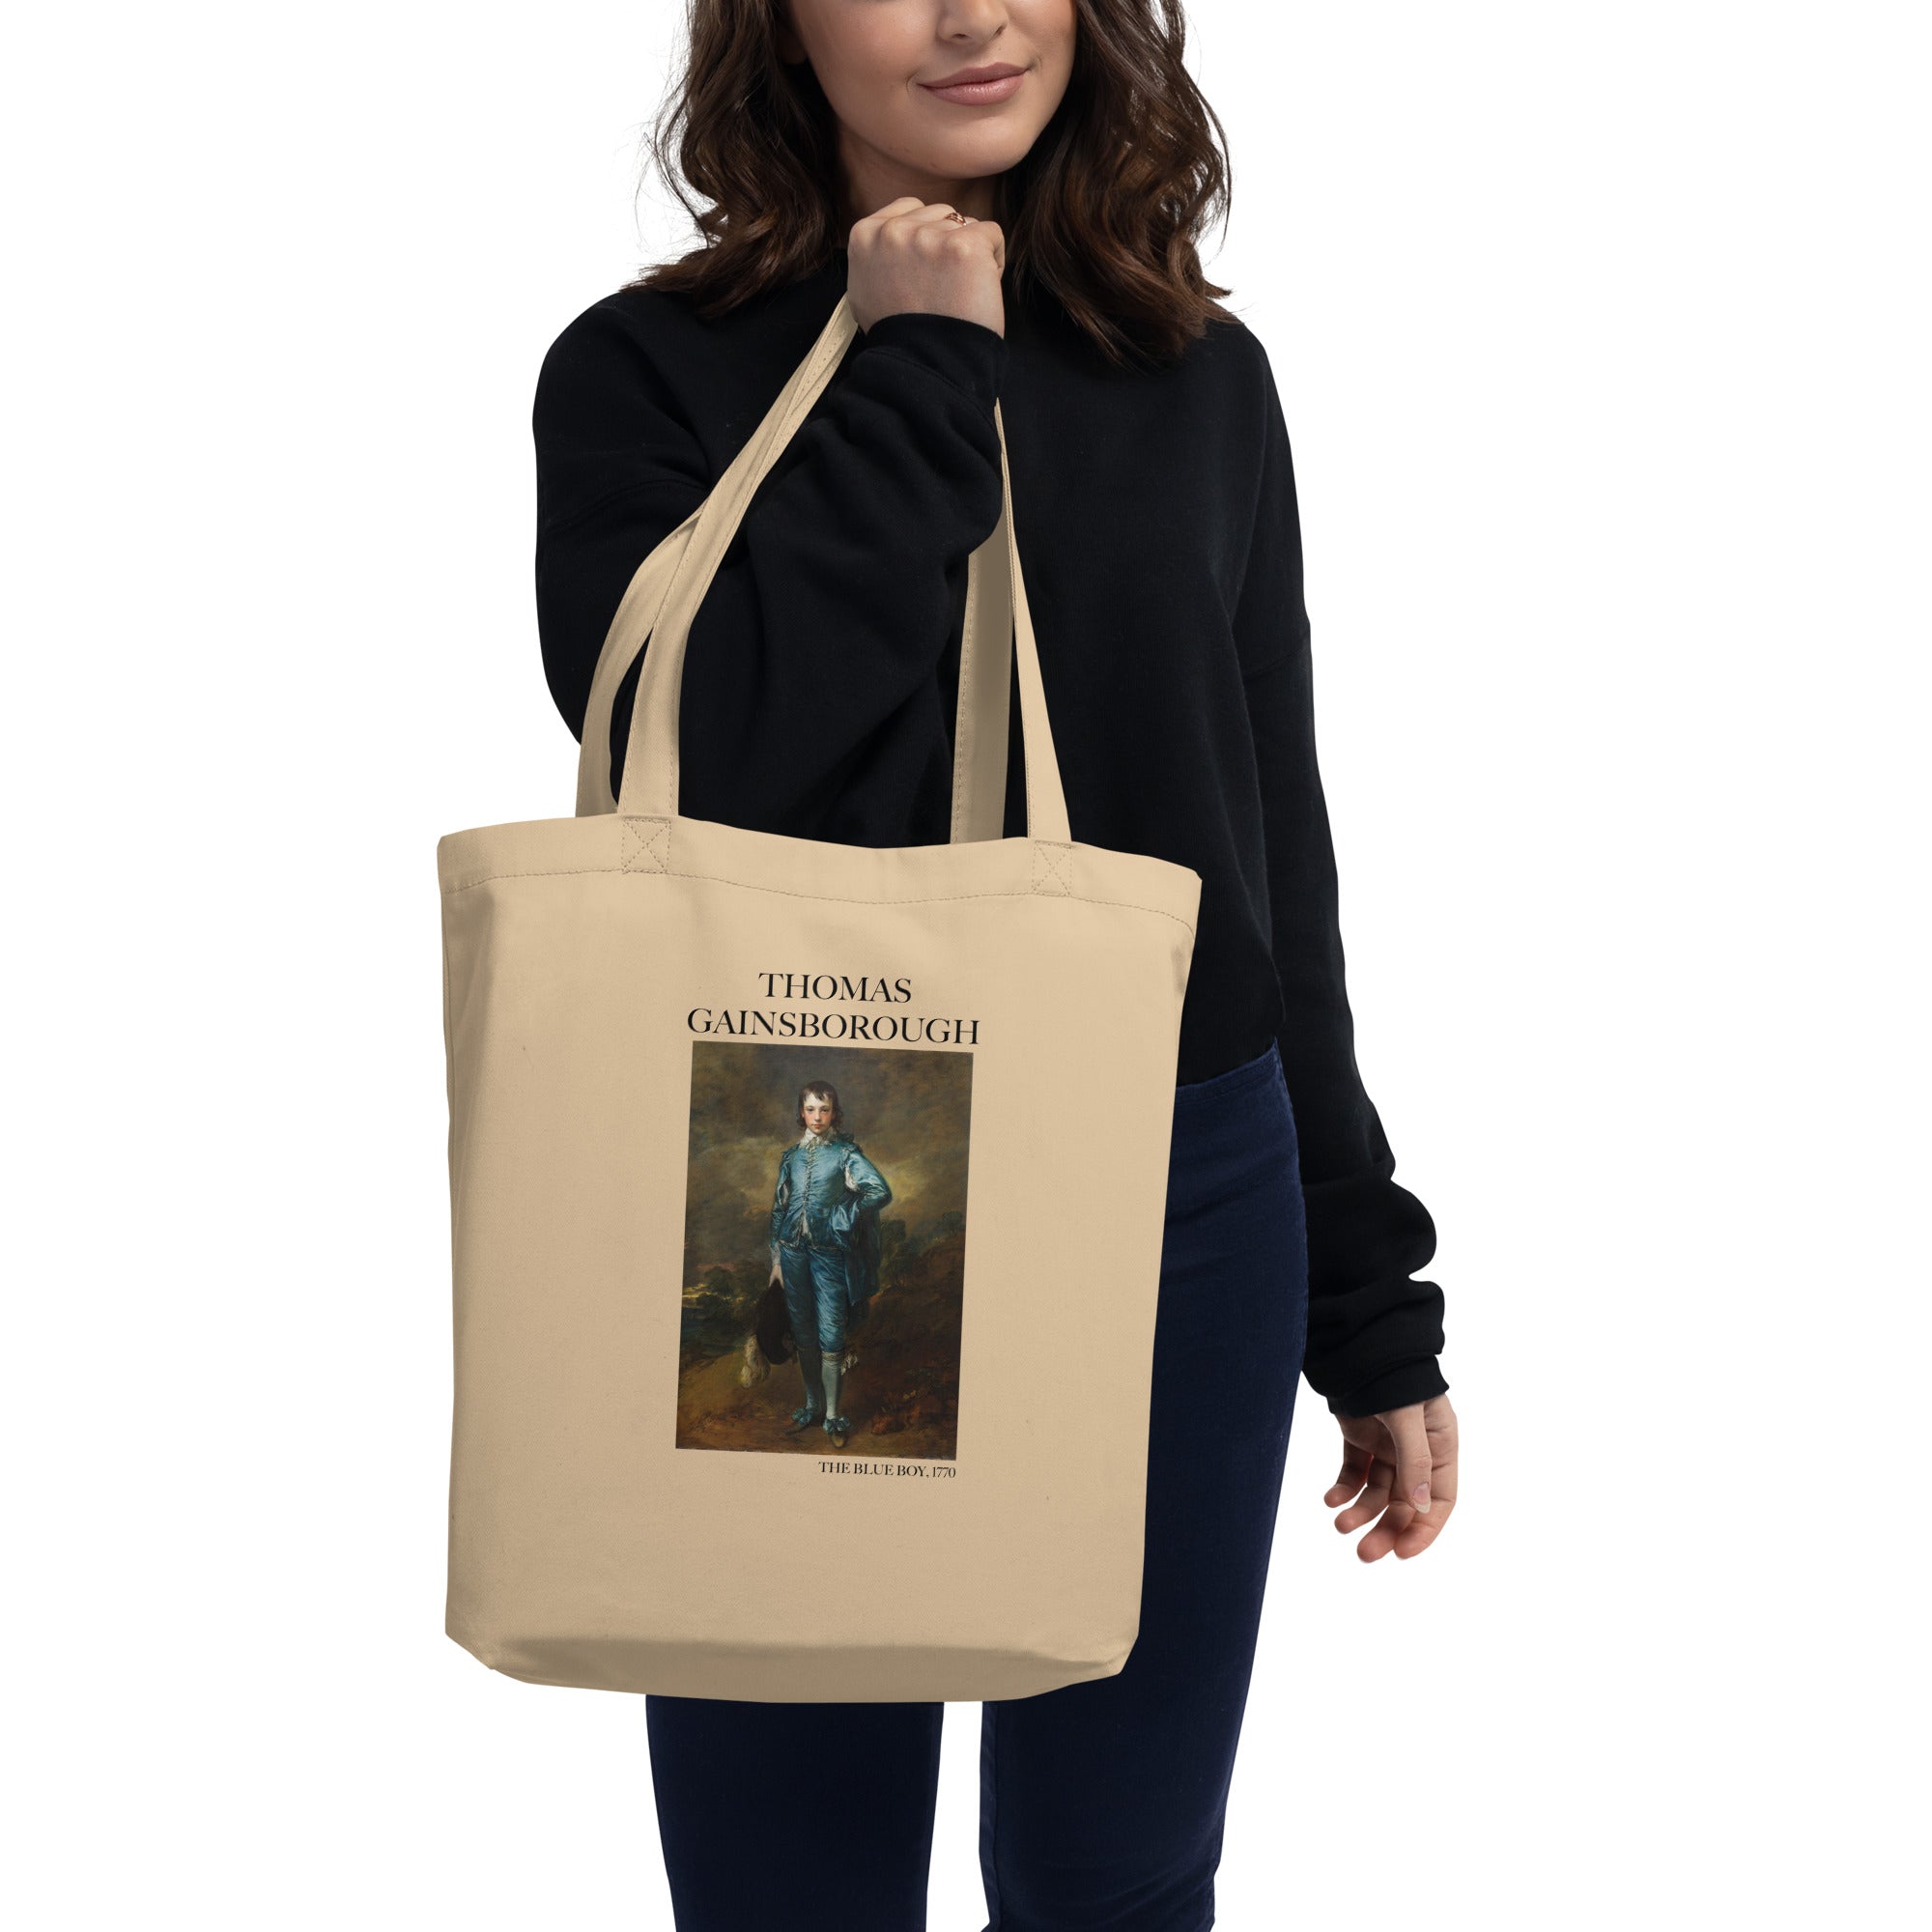 Thomas Gainsborough 'The Blue Boy' Famous Painting Totebag | Eco Friendly Art Tote Bag